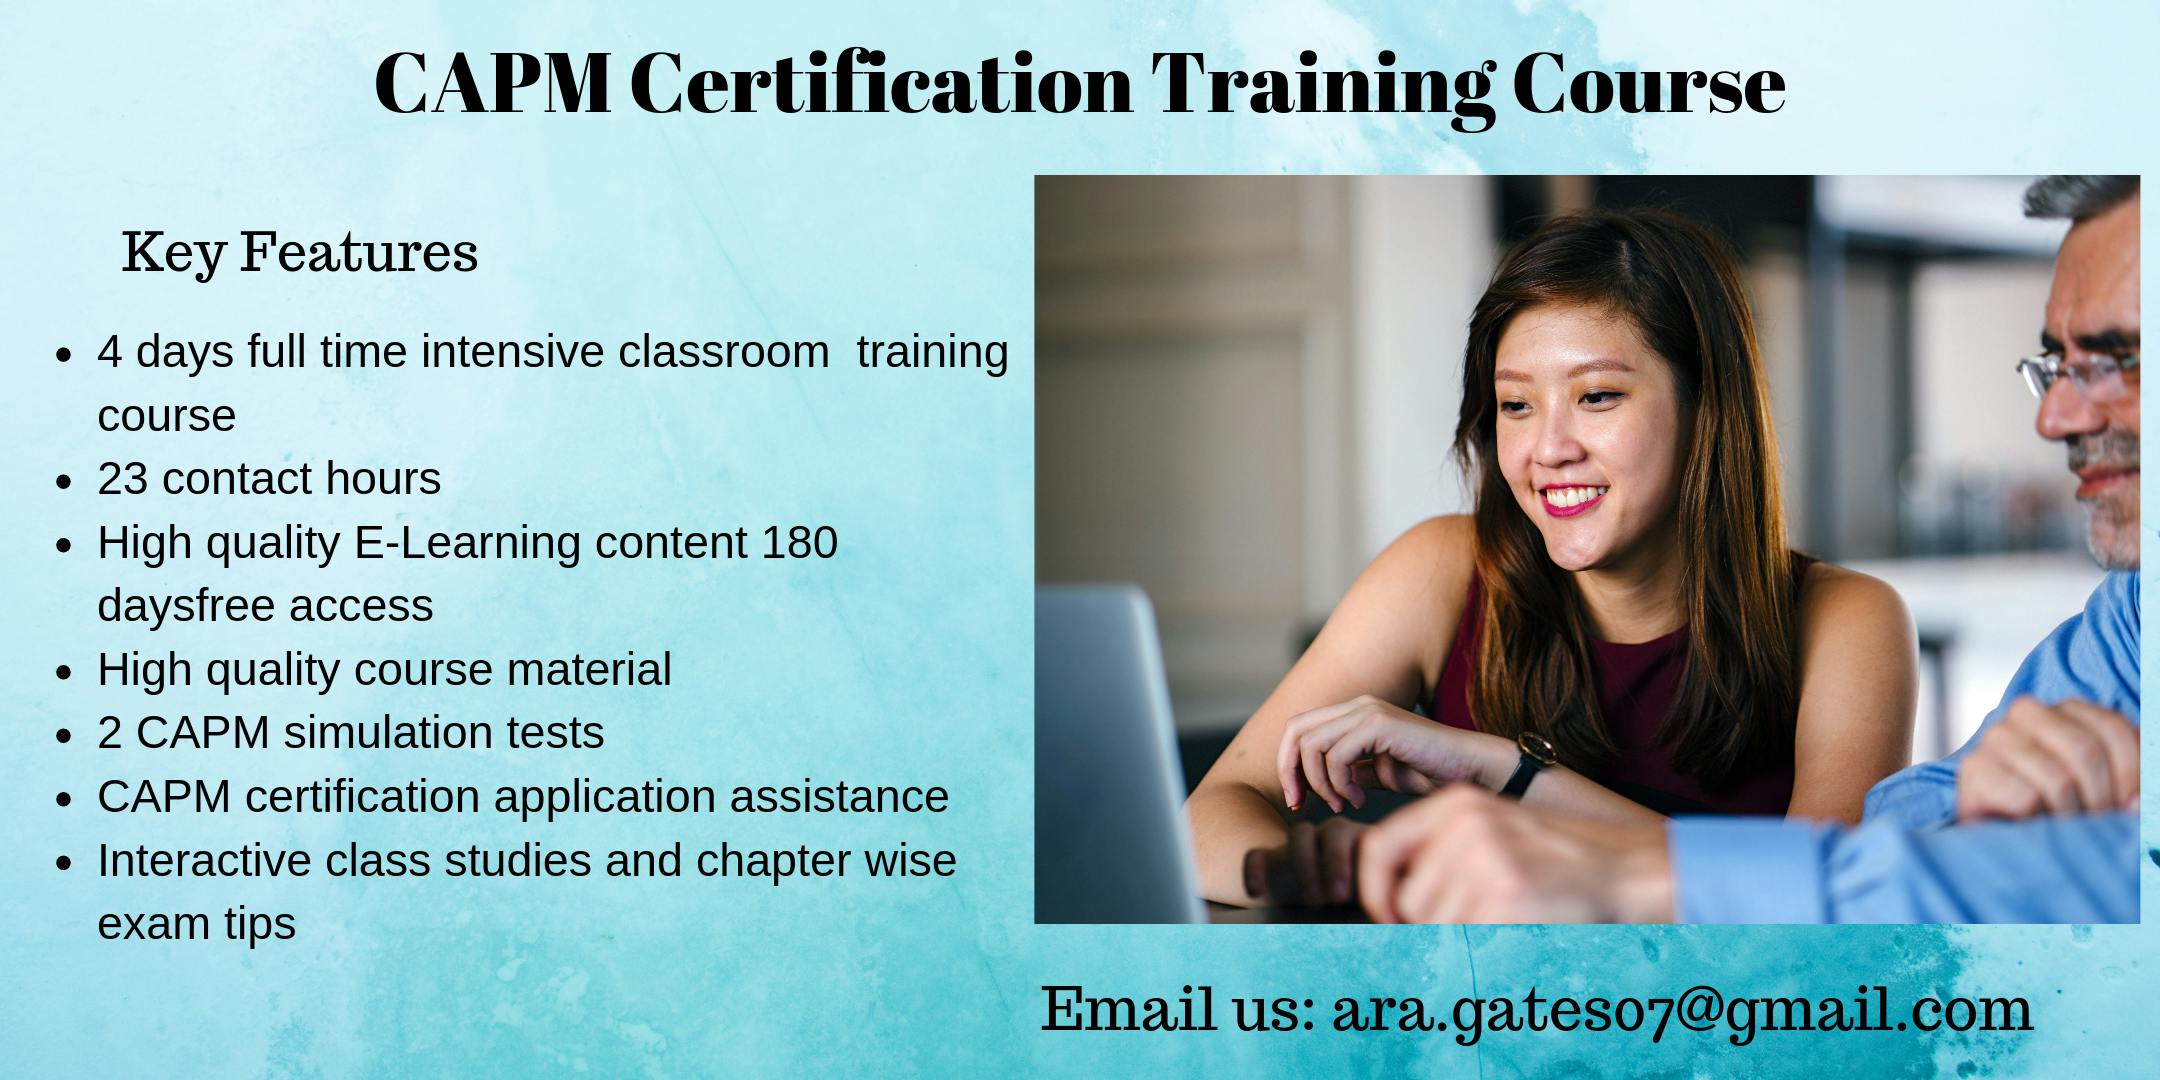 CAPM Certification Course in Boise, ID